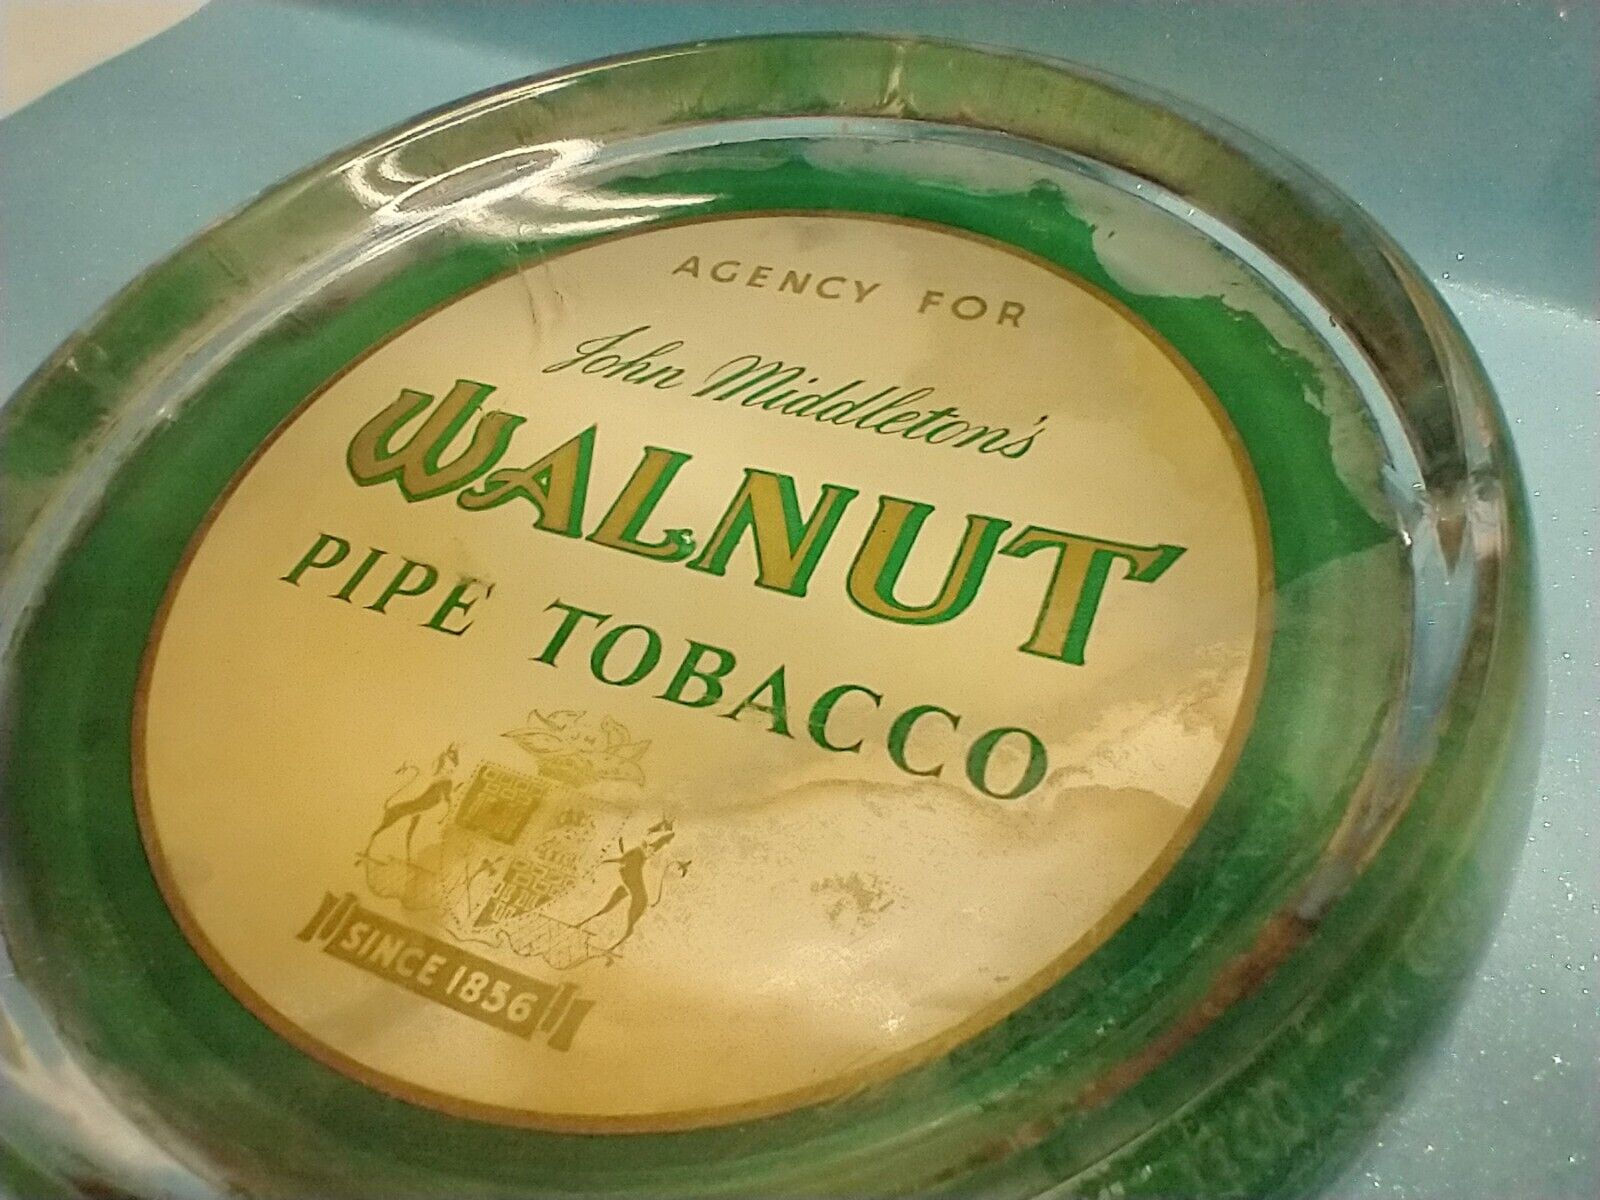 Vintage John Middleton\'s Walnut Pipe Tobacco glass ashtray